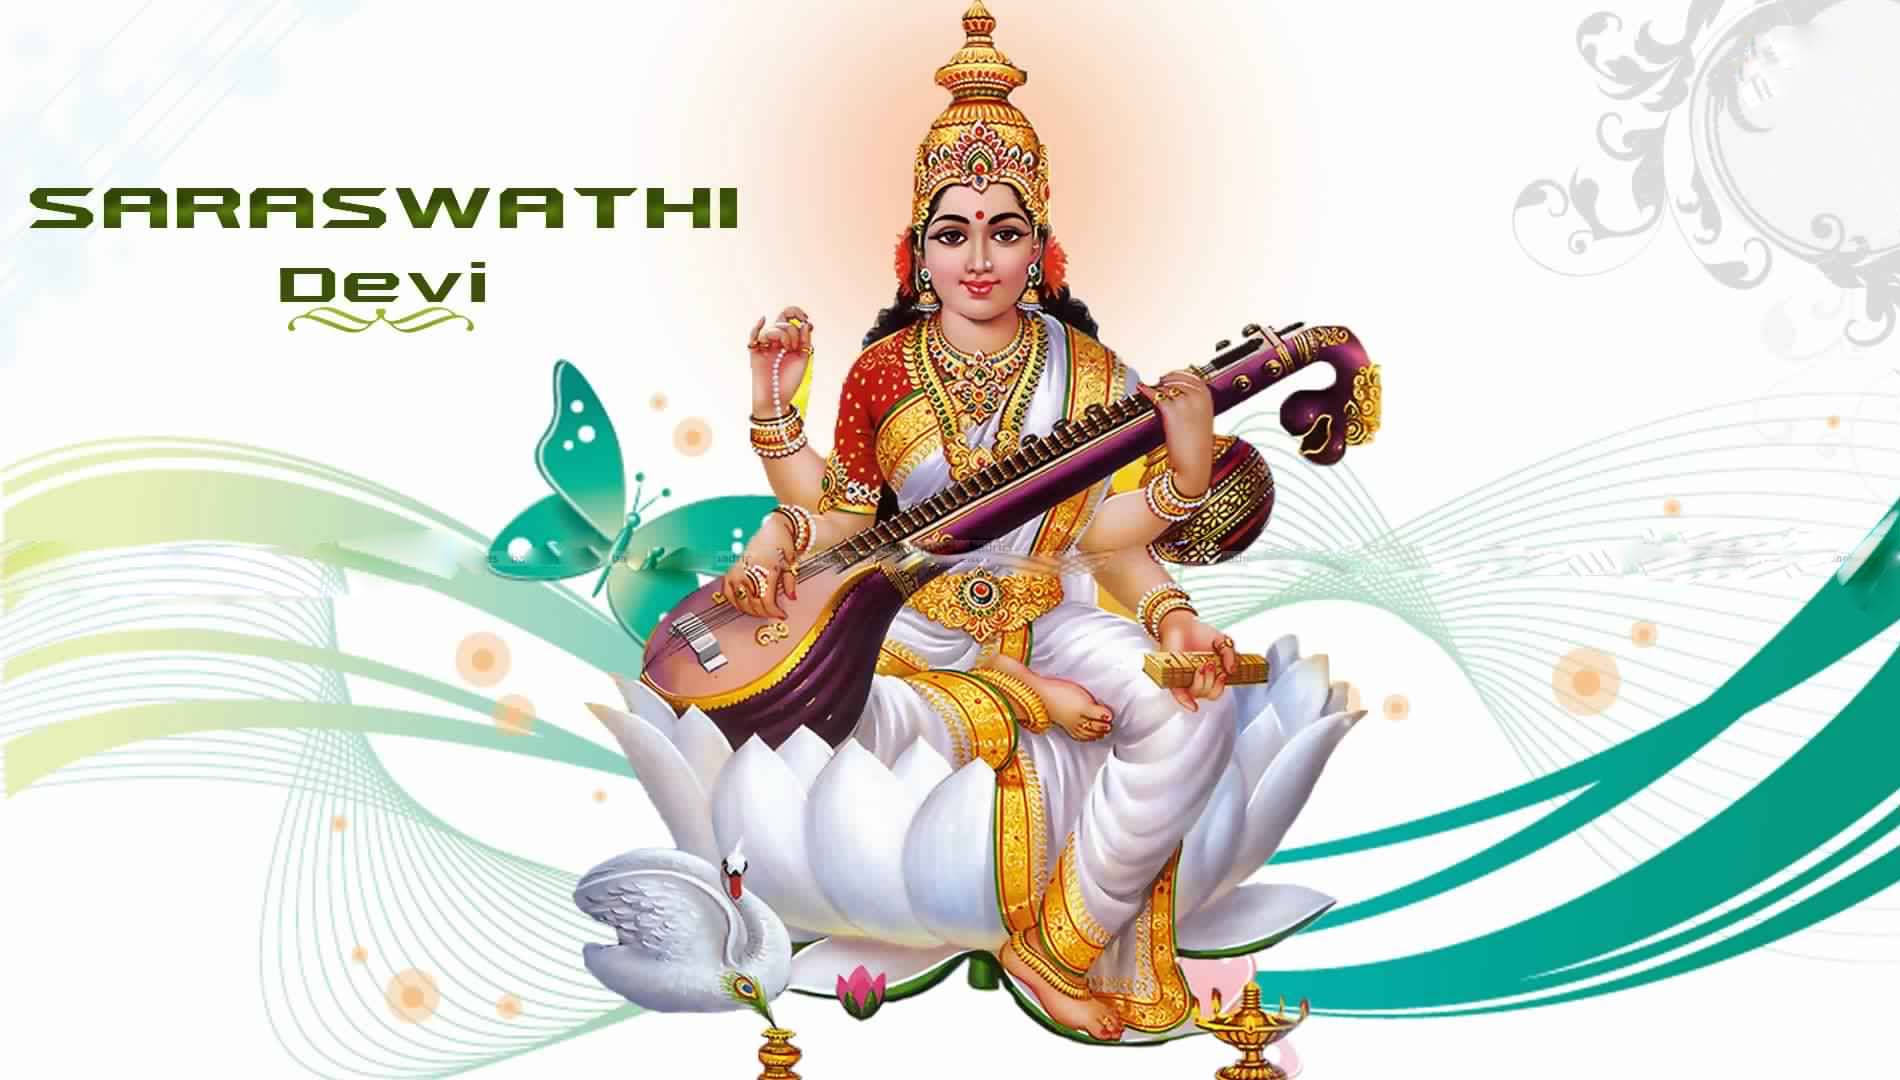 Free Saraswati Mata Wallpaper Downloads, [100+] Saraswati Mata Wallpapers  for FREE 